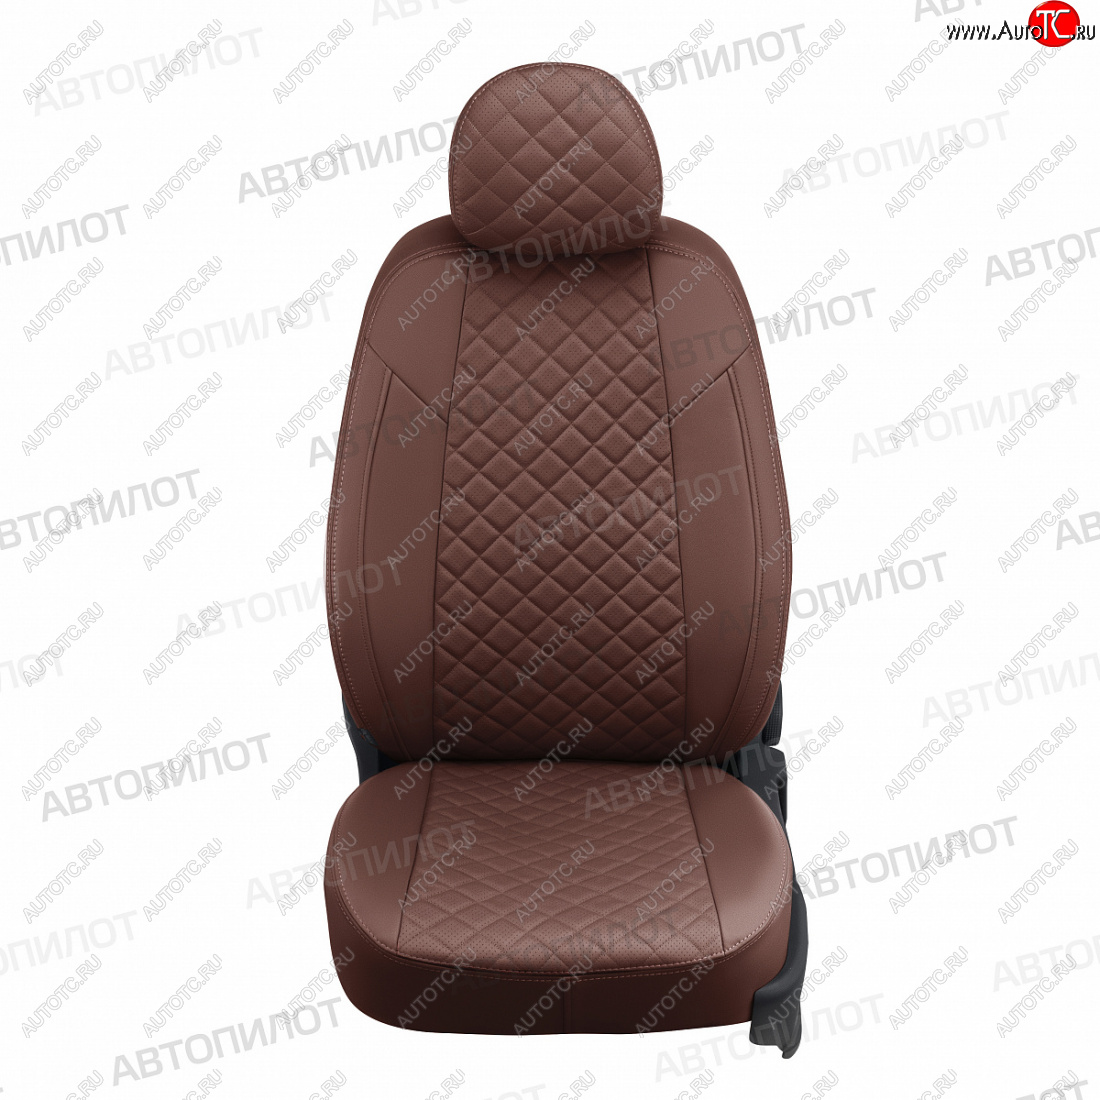 7 599 р. Чехлы сидений (экокожа, Classic) Автопилот Ромб  KIA Cerato  3 YD (2013-2019) (темно-коричневый)